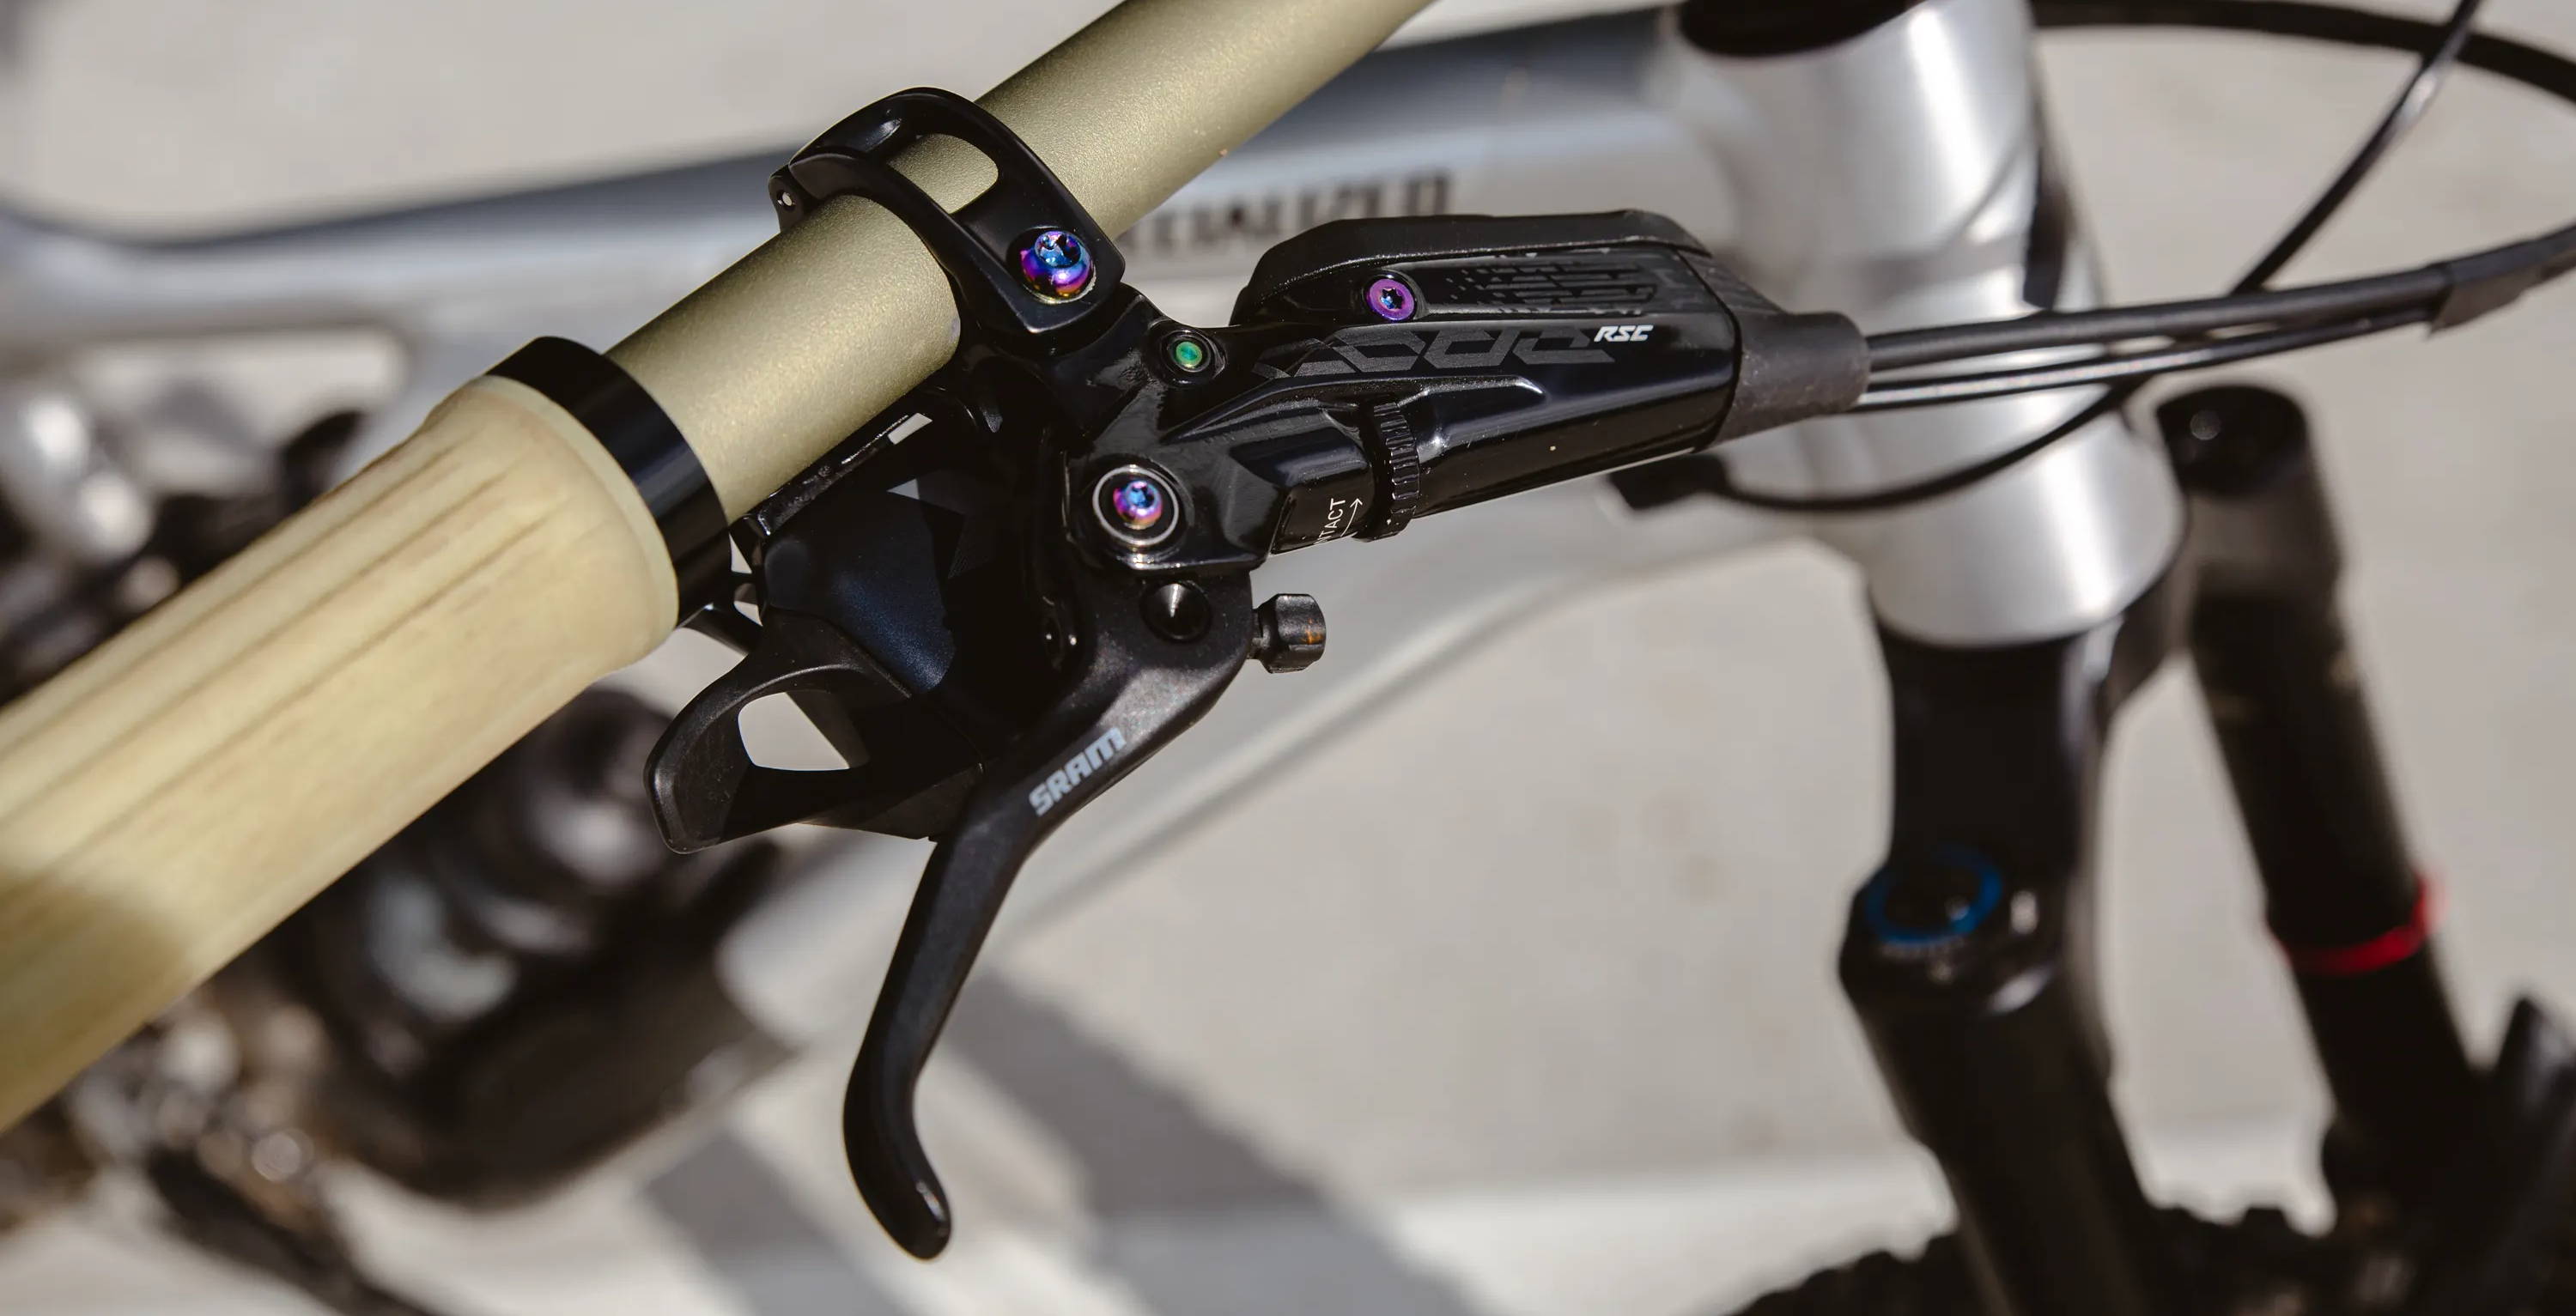 SRAM Code RSC Mountain bike 4 piston brakes on renthal handlebars on a specialized stumpjumper evo